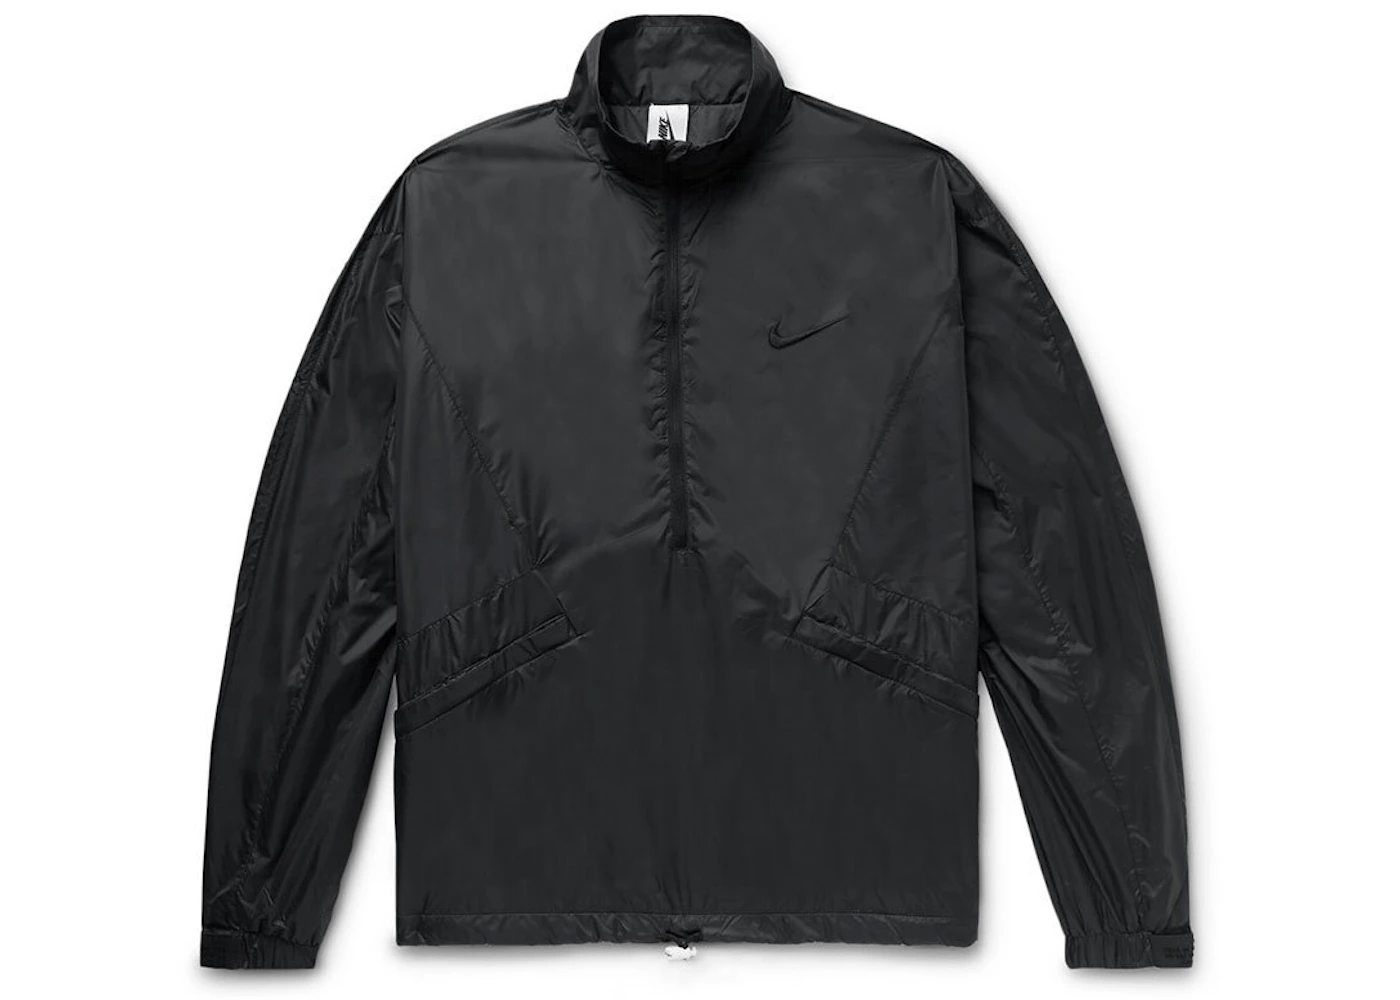 Kinderrijmpjes betreuren Tijdig FEAR OF GOD x Nike Long Sleeve Half Zip Jacket Black - FW18 - US